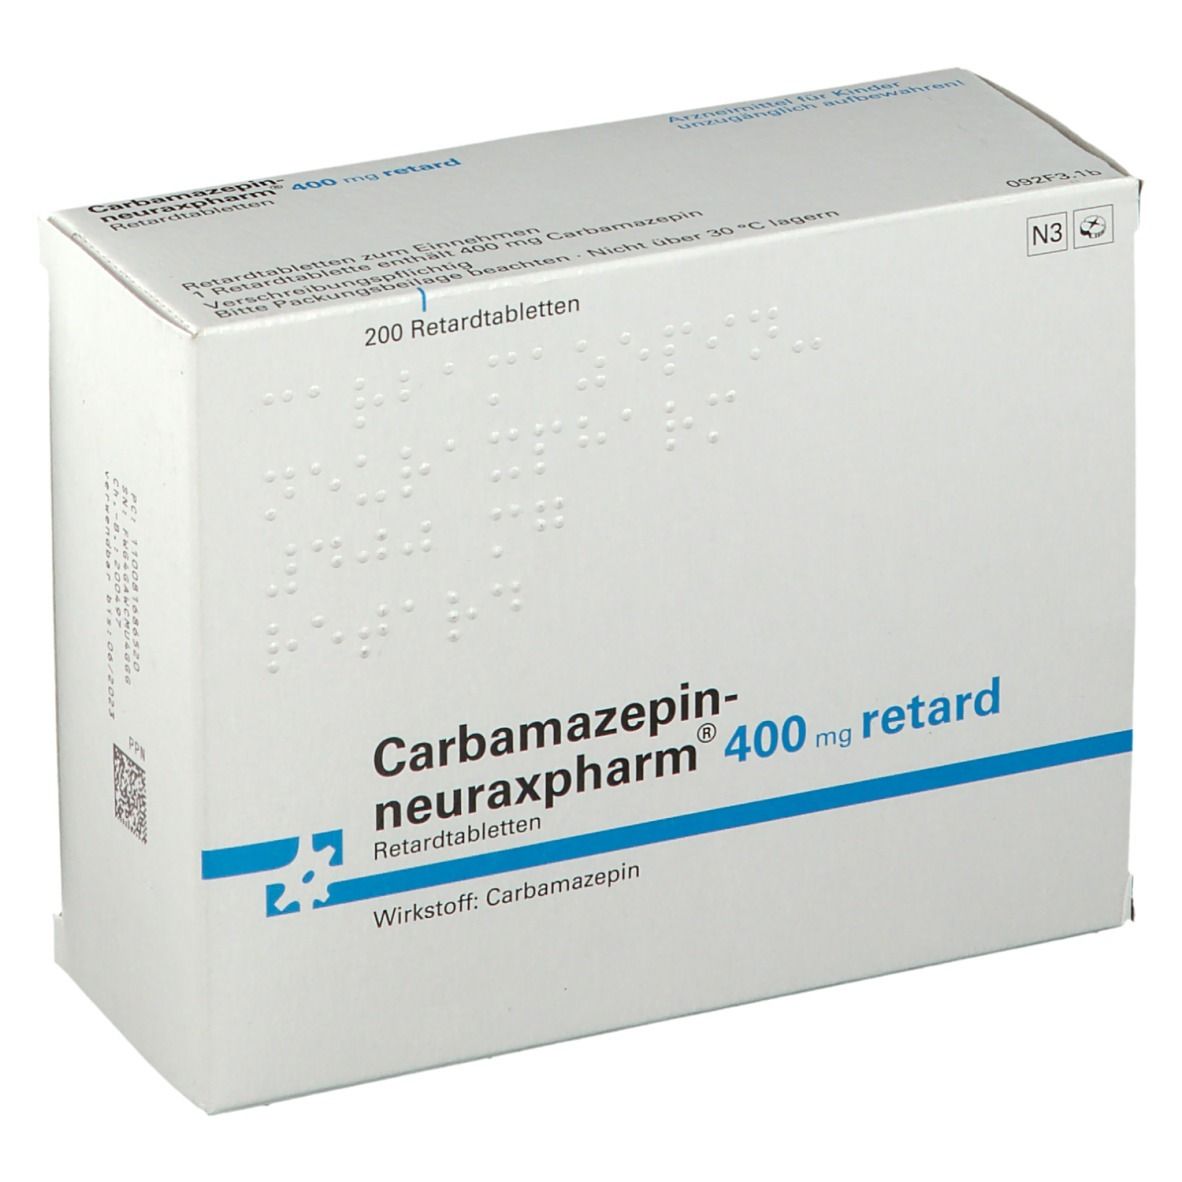 Carbamazepin-neuraxpharm® 400 mg retard